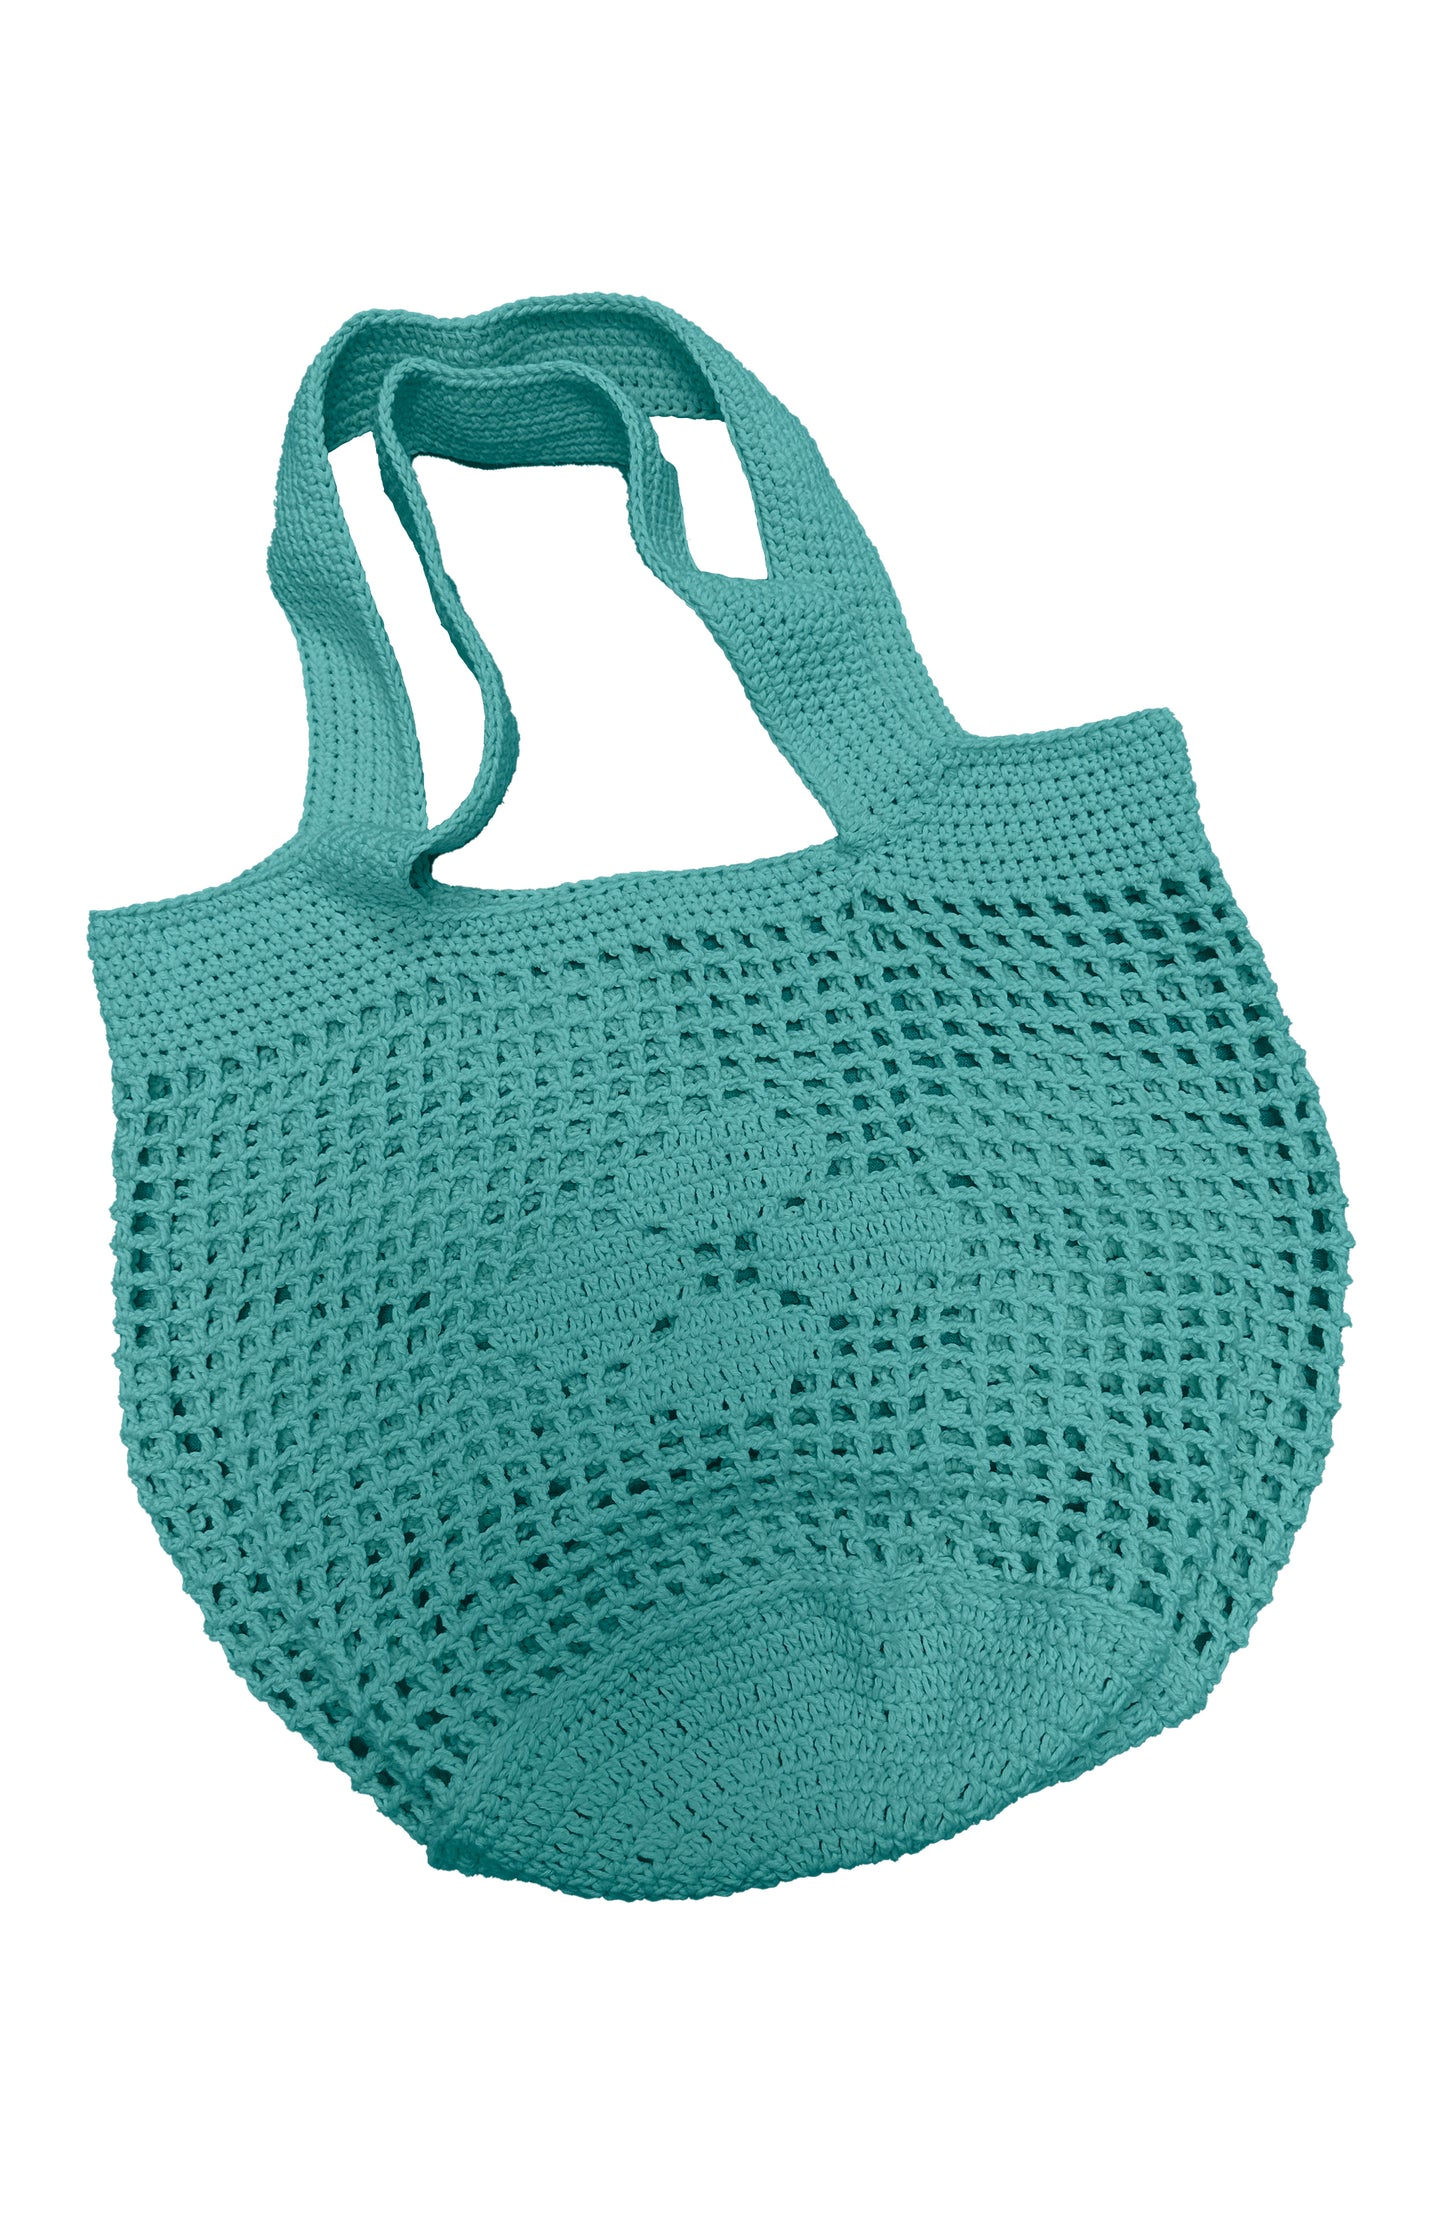 Crochet Bag Teal By San Lorenzo Bikinis